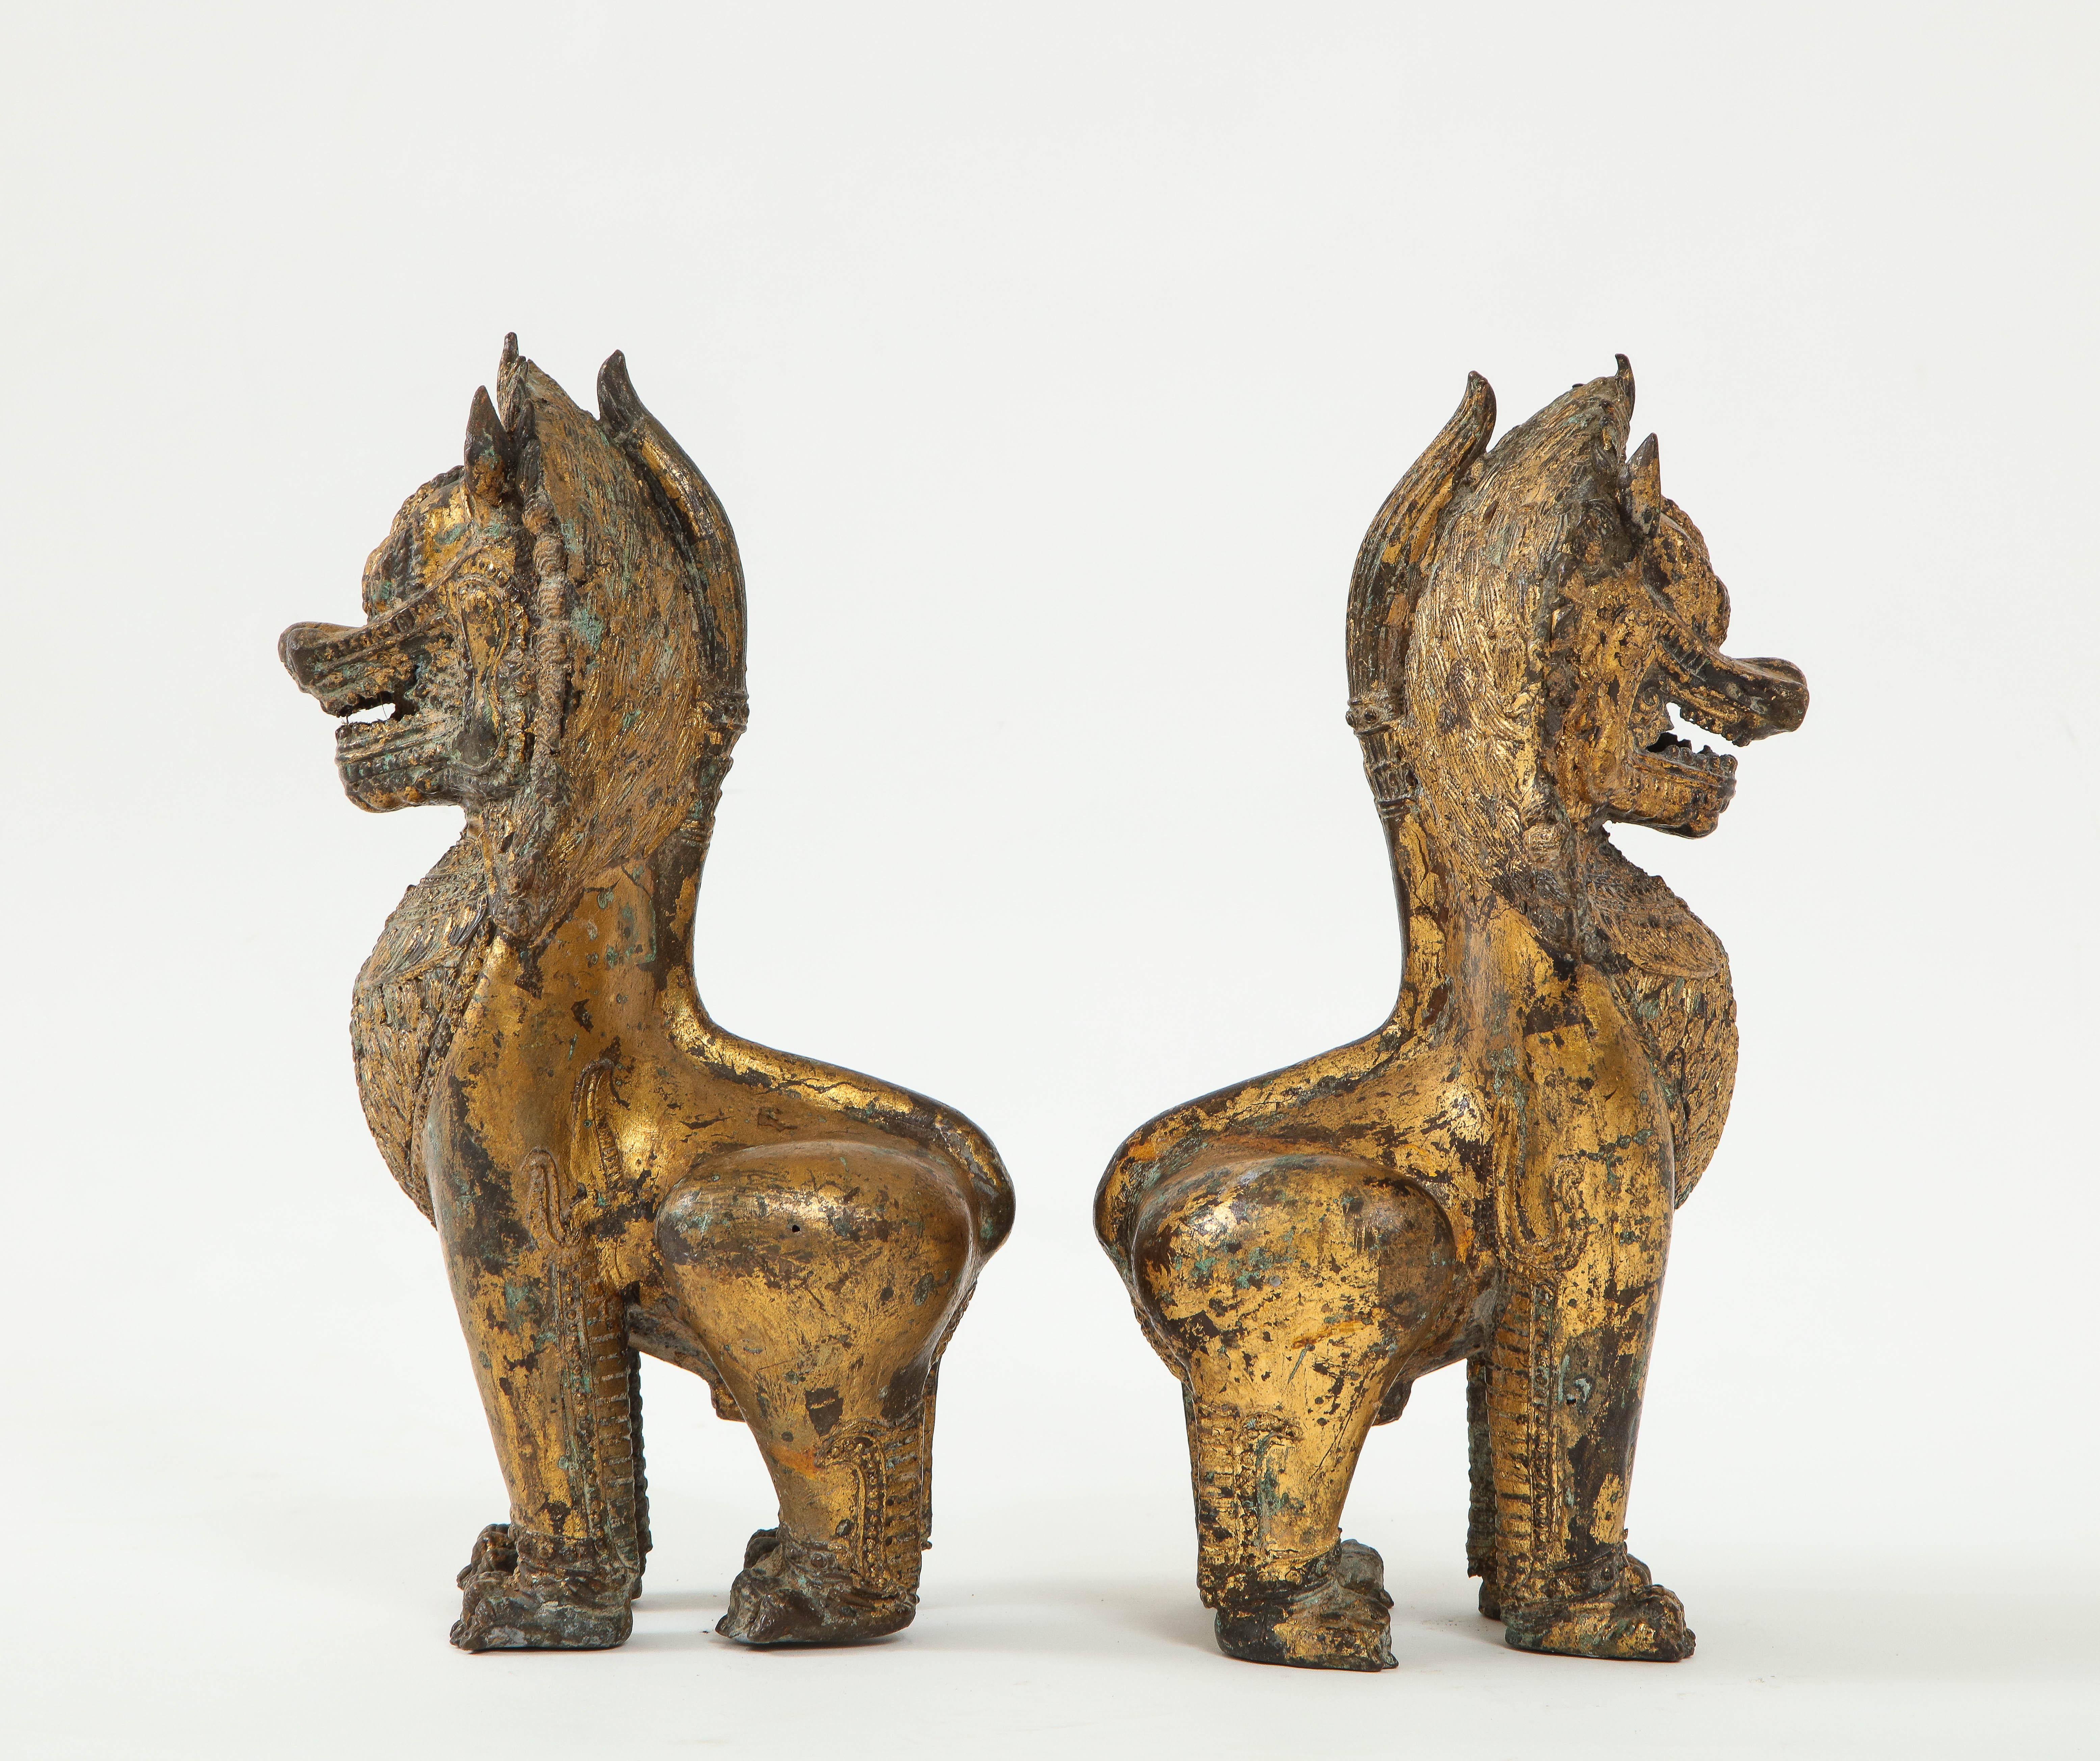 Chinese Export 19th Century Gilt Bronze Foo Dogs